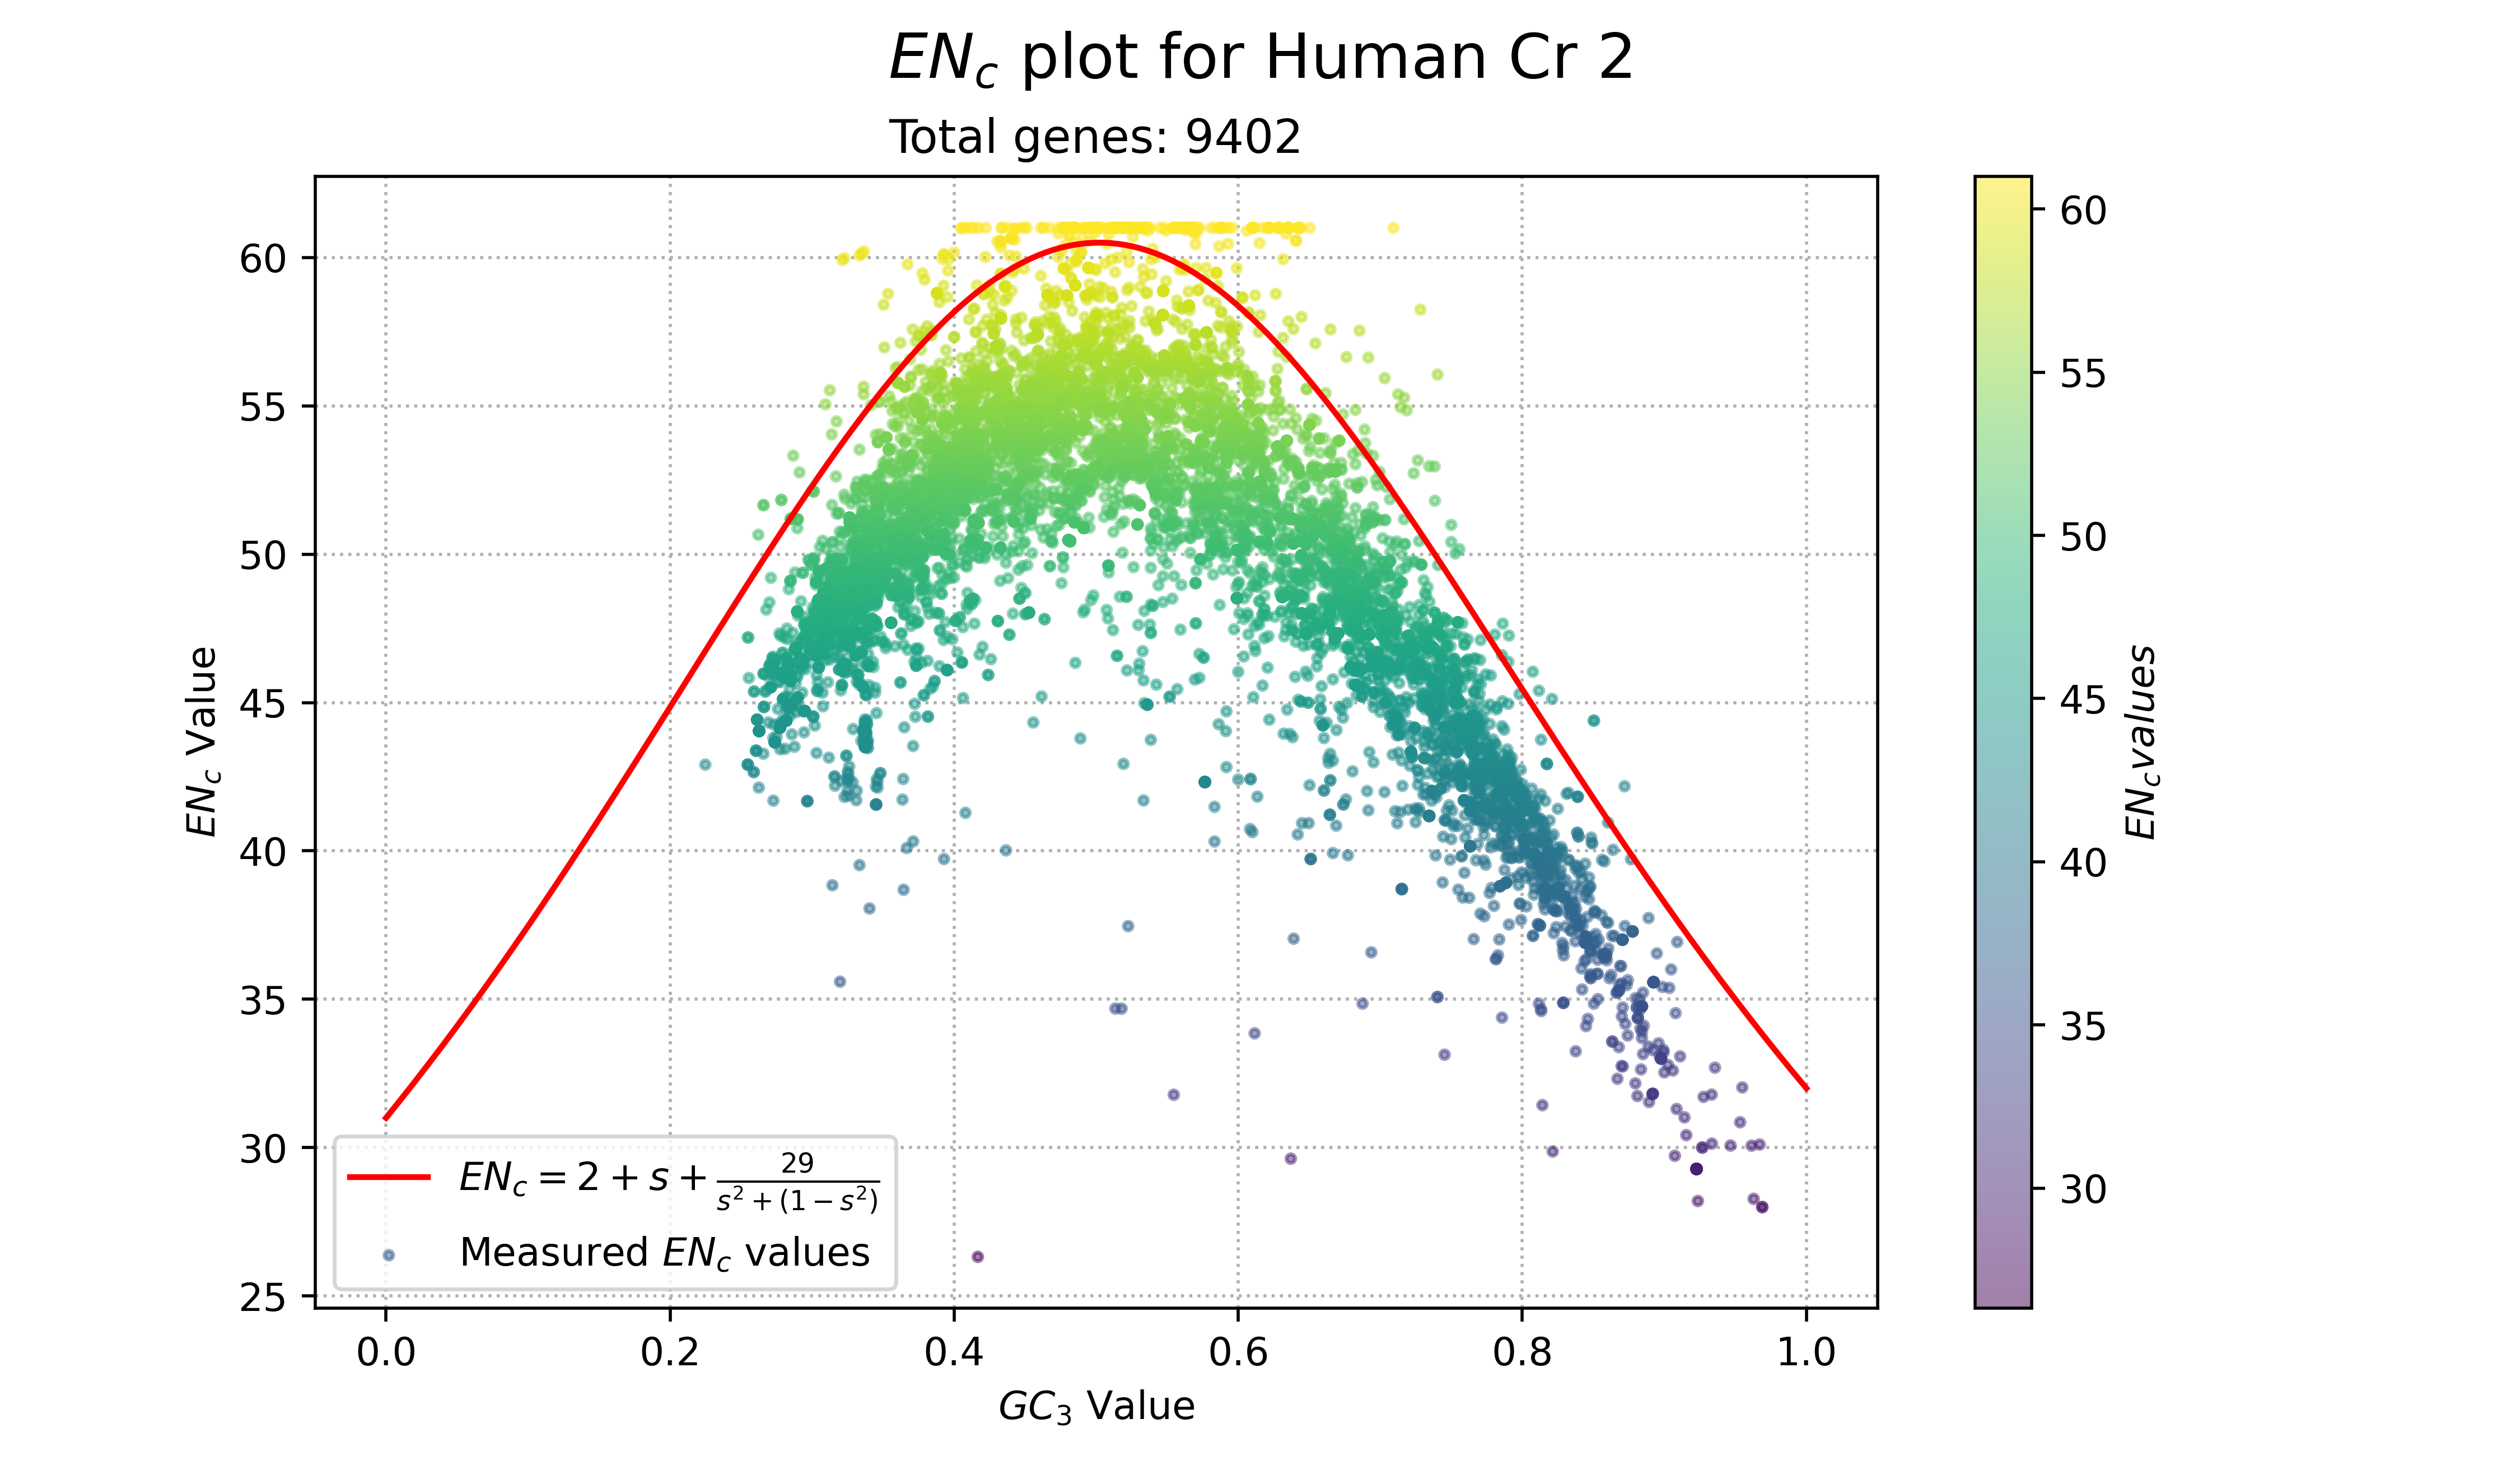 ENc plot for human chromosome 2